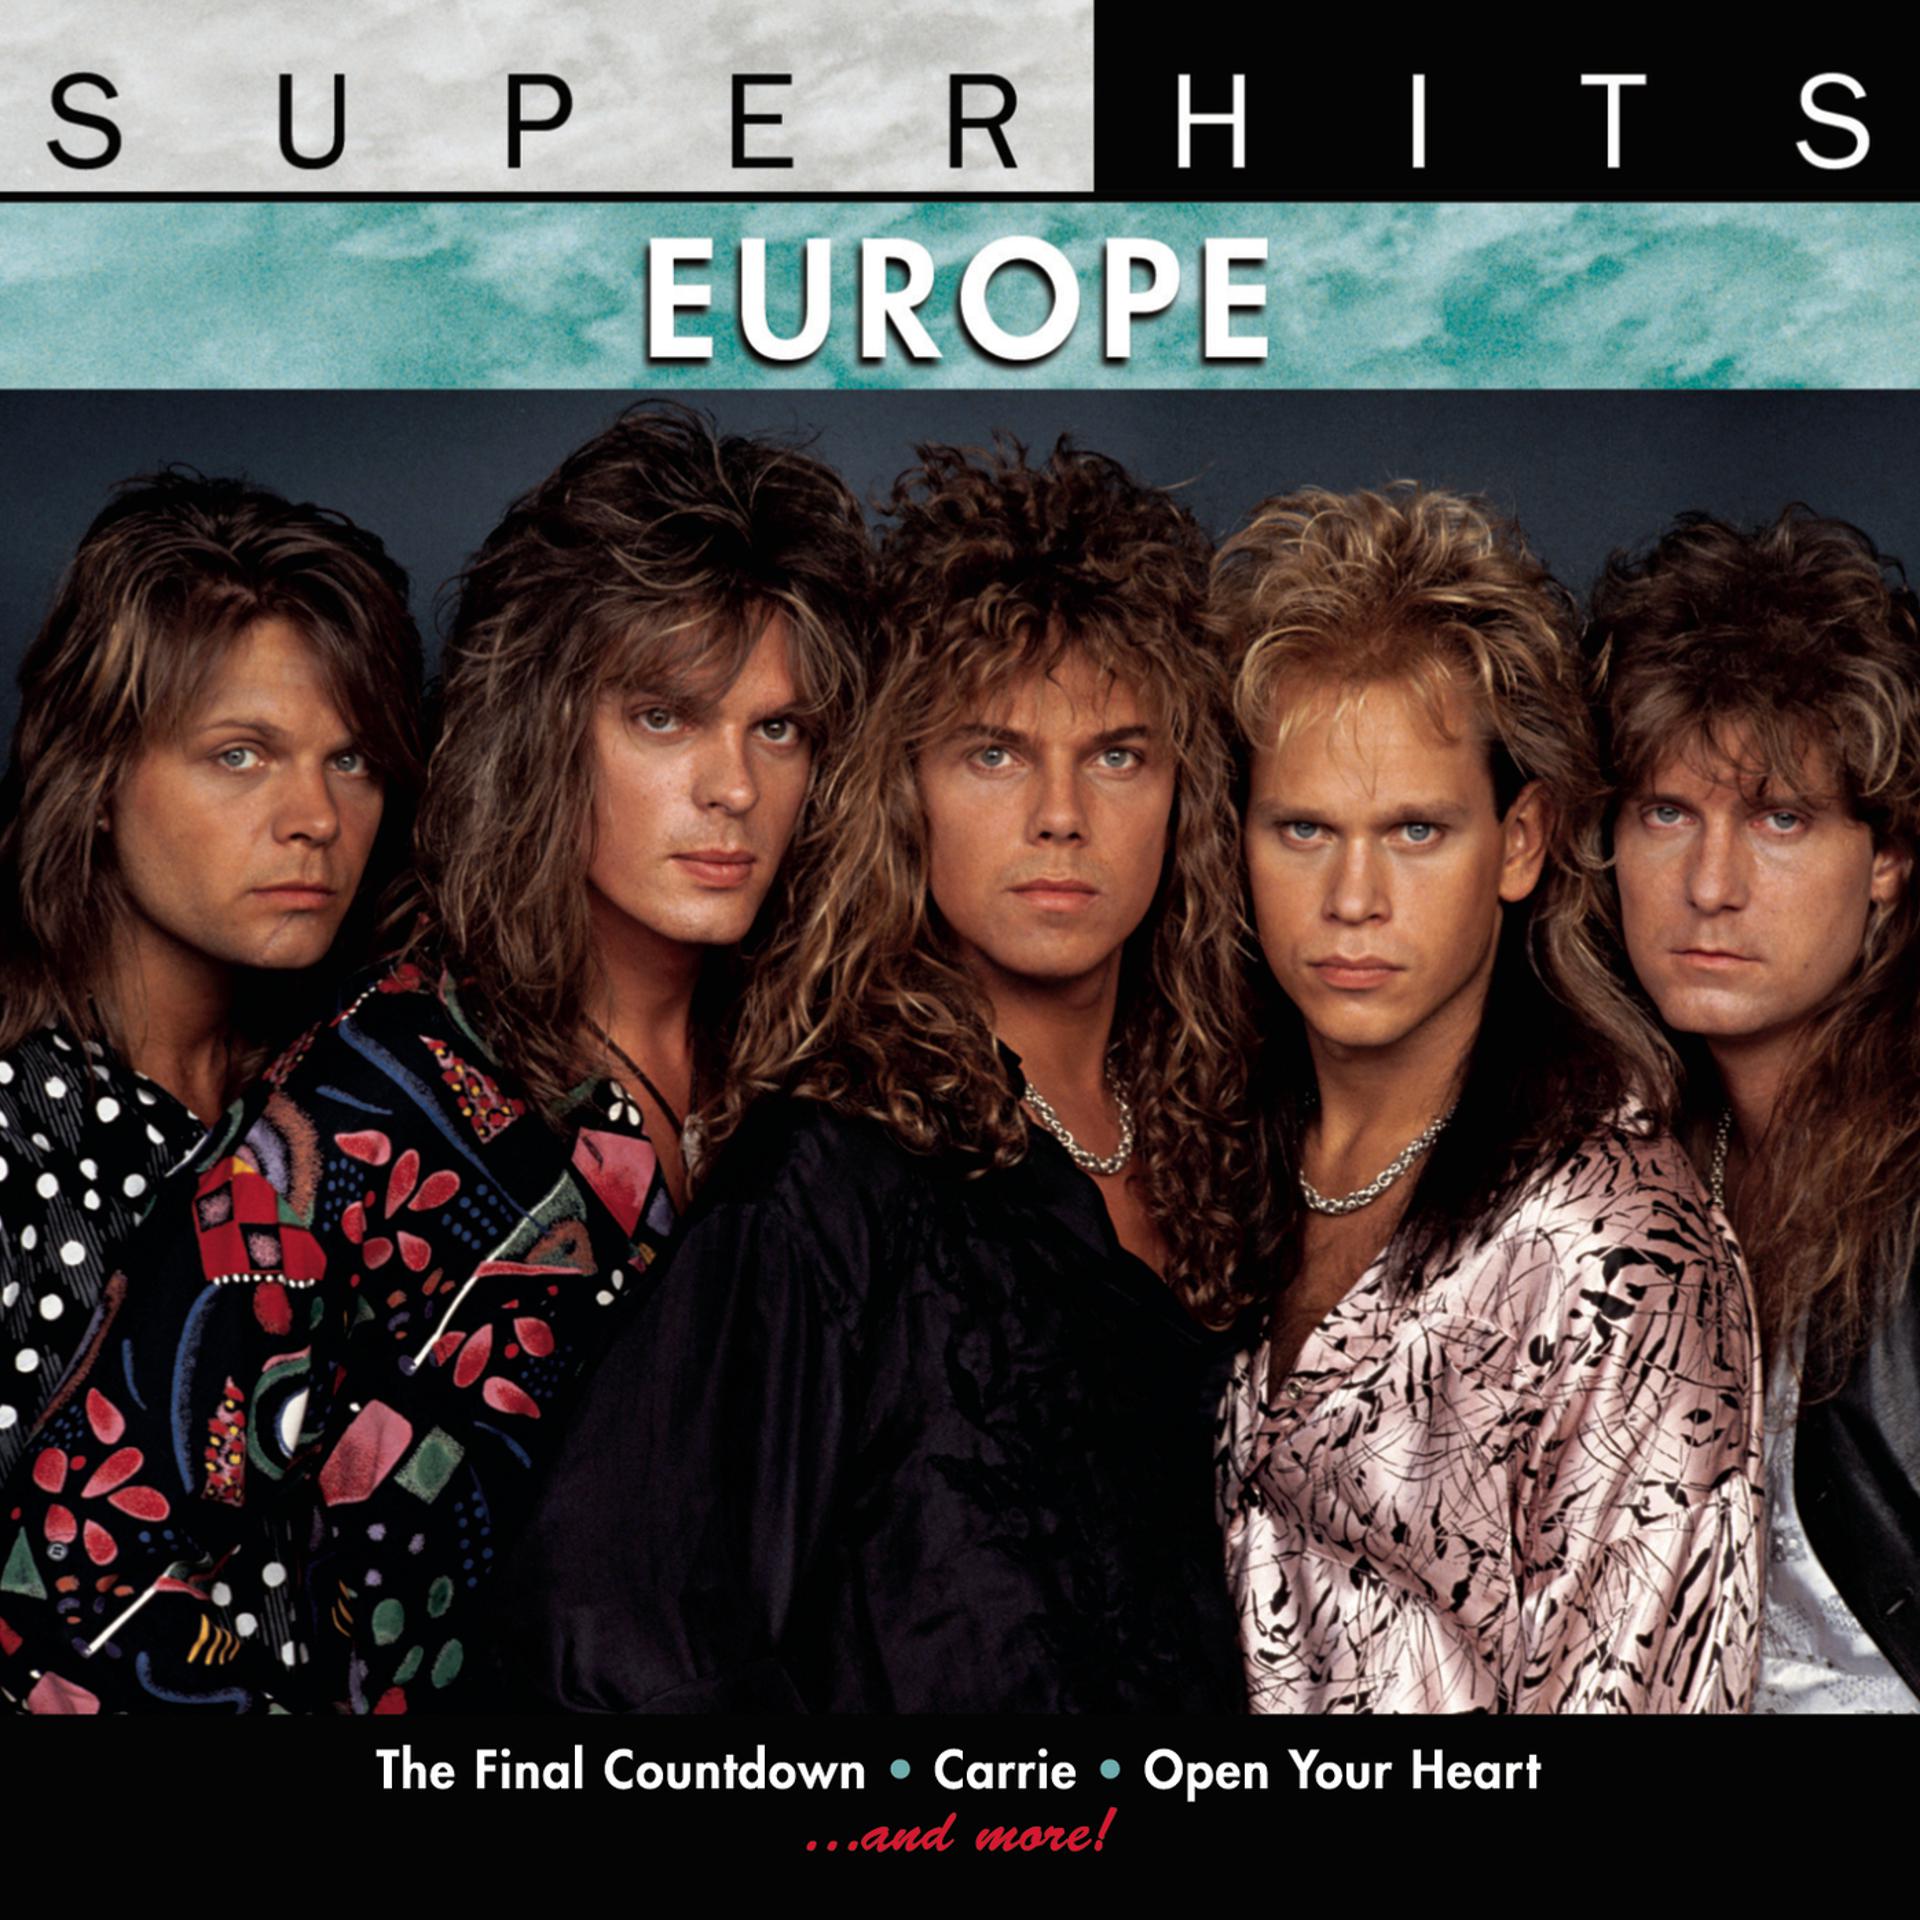 Europe группа 1986. Europa группа the Final Countdown. Europe Band обложки. Europe the Final Countdown обложка. Песни рок зарубежный слушать